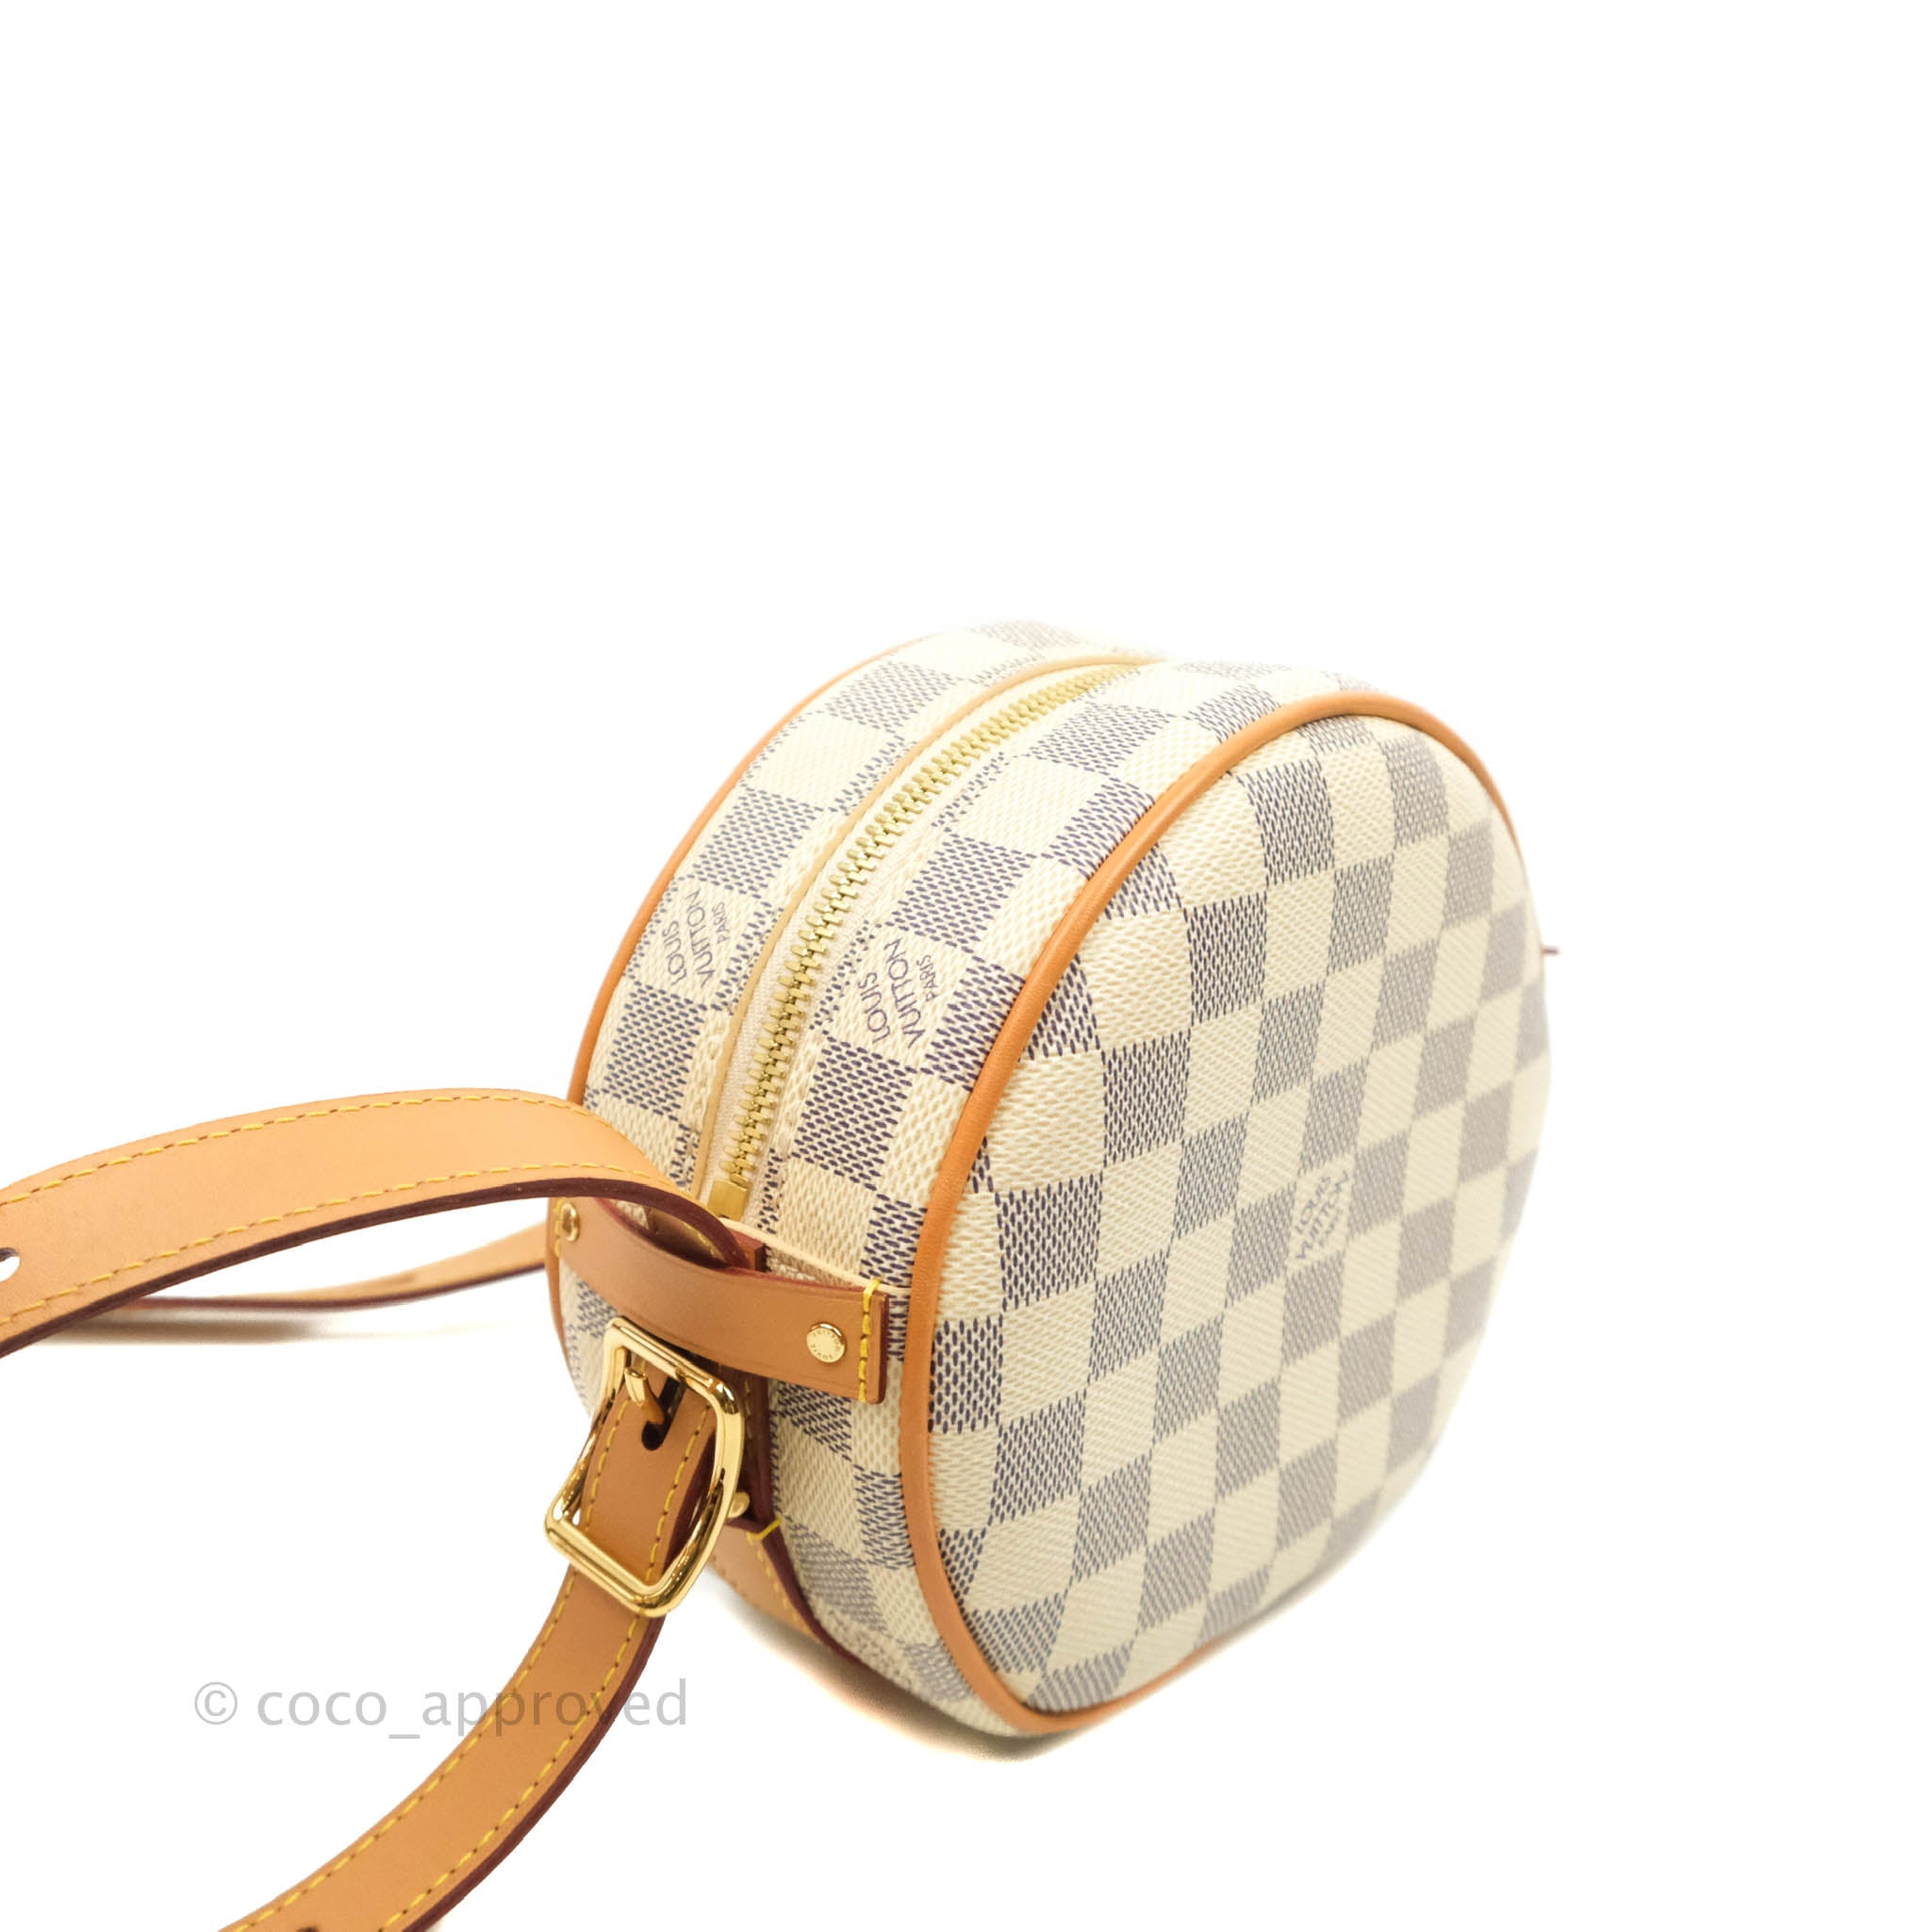 New Louis Vuitton BOITE CHAPEAU PM Damier Check White/Cream Crossbody!